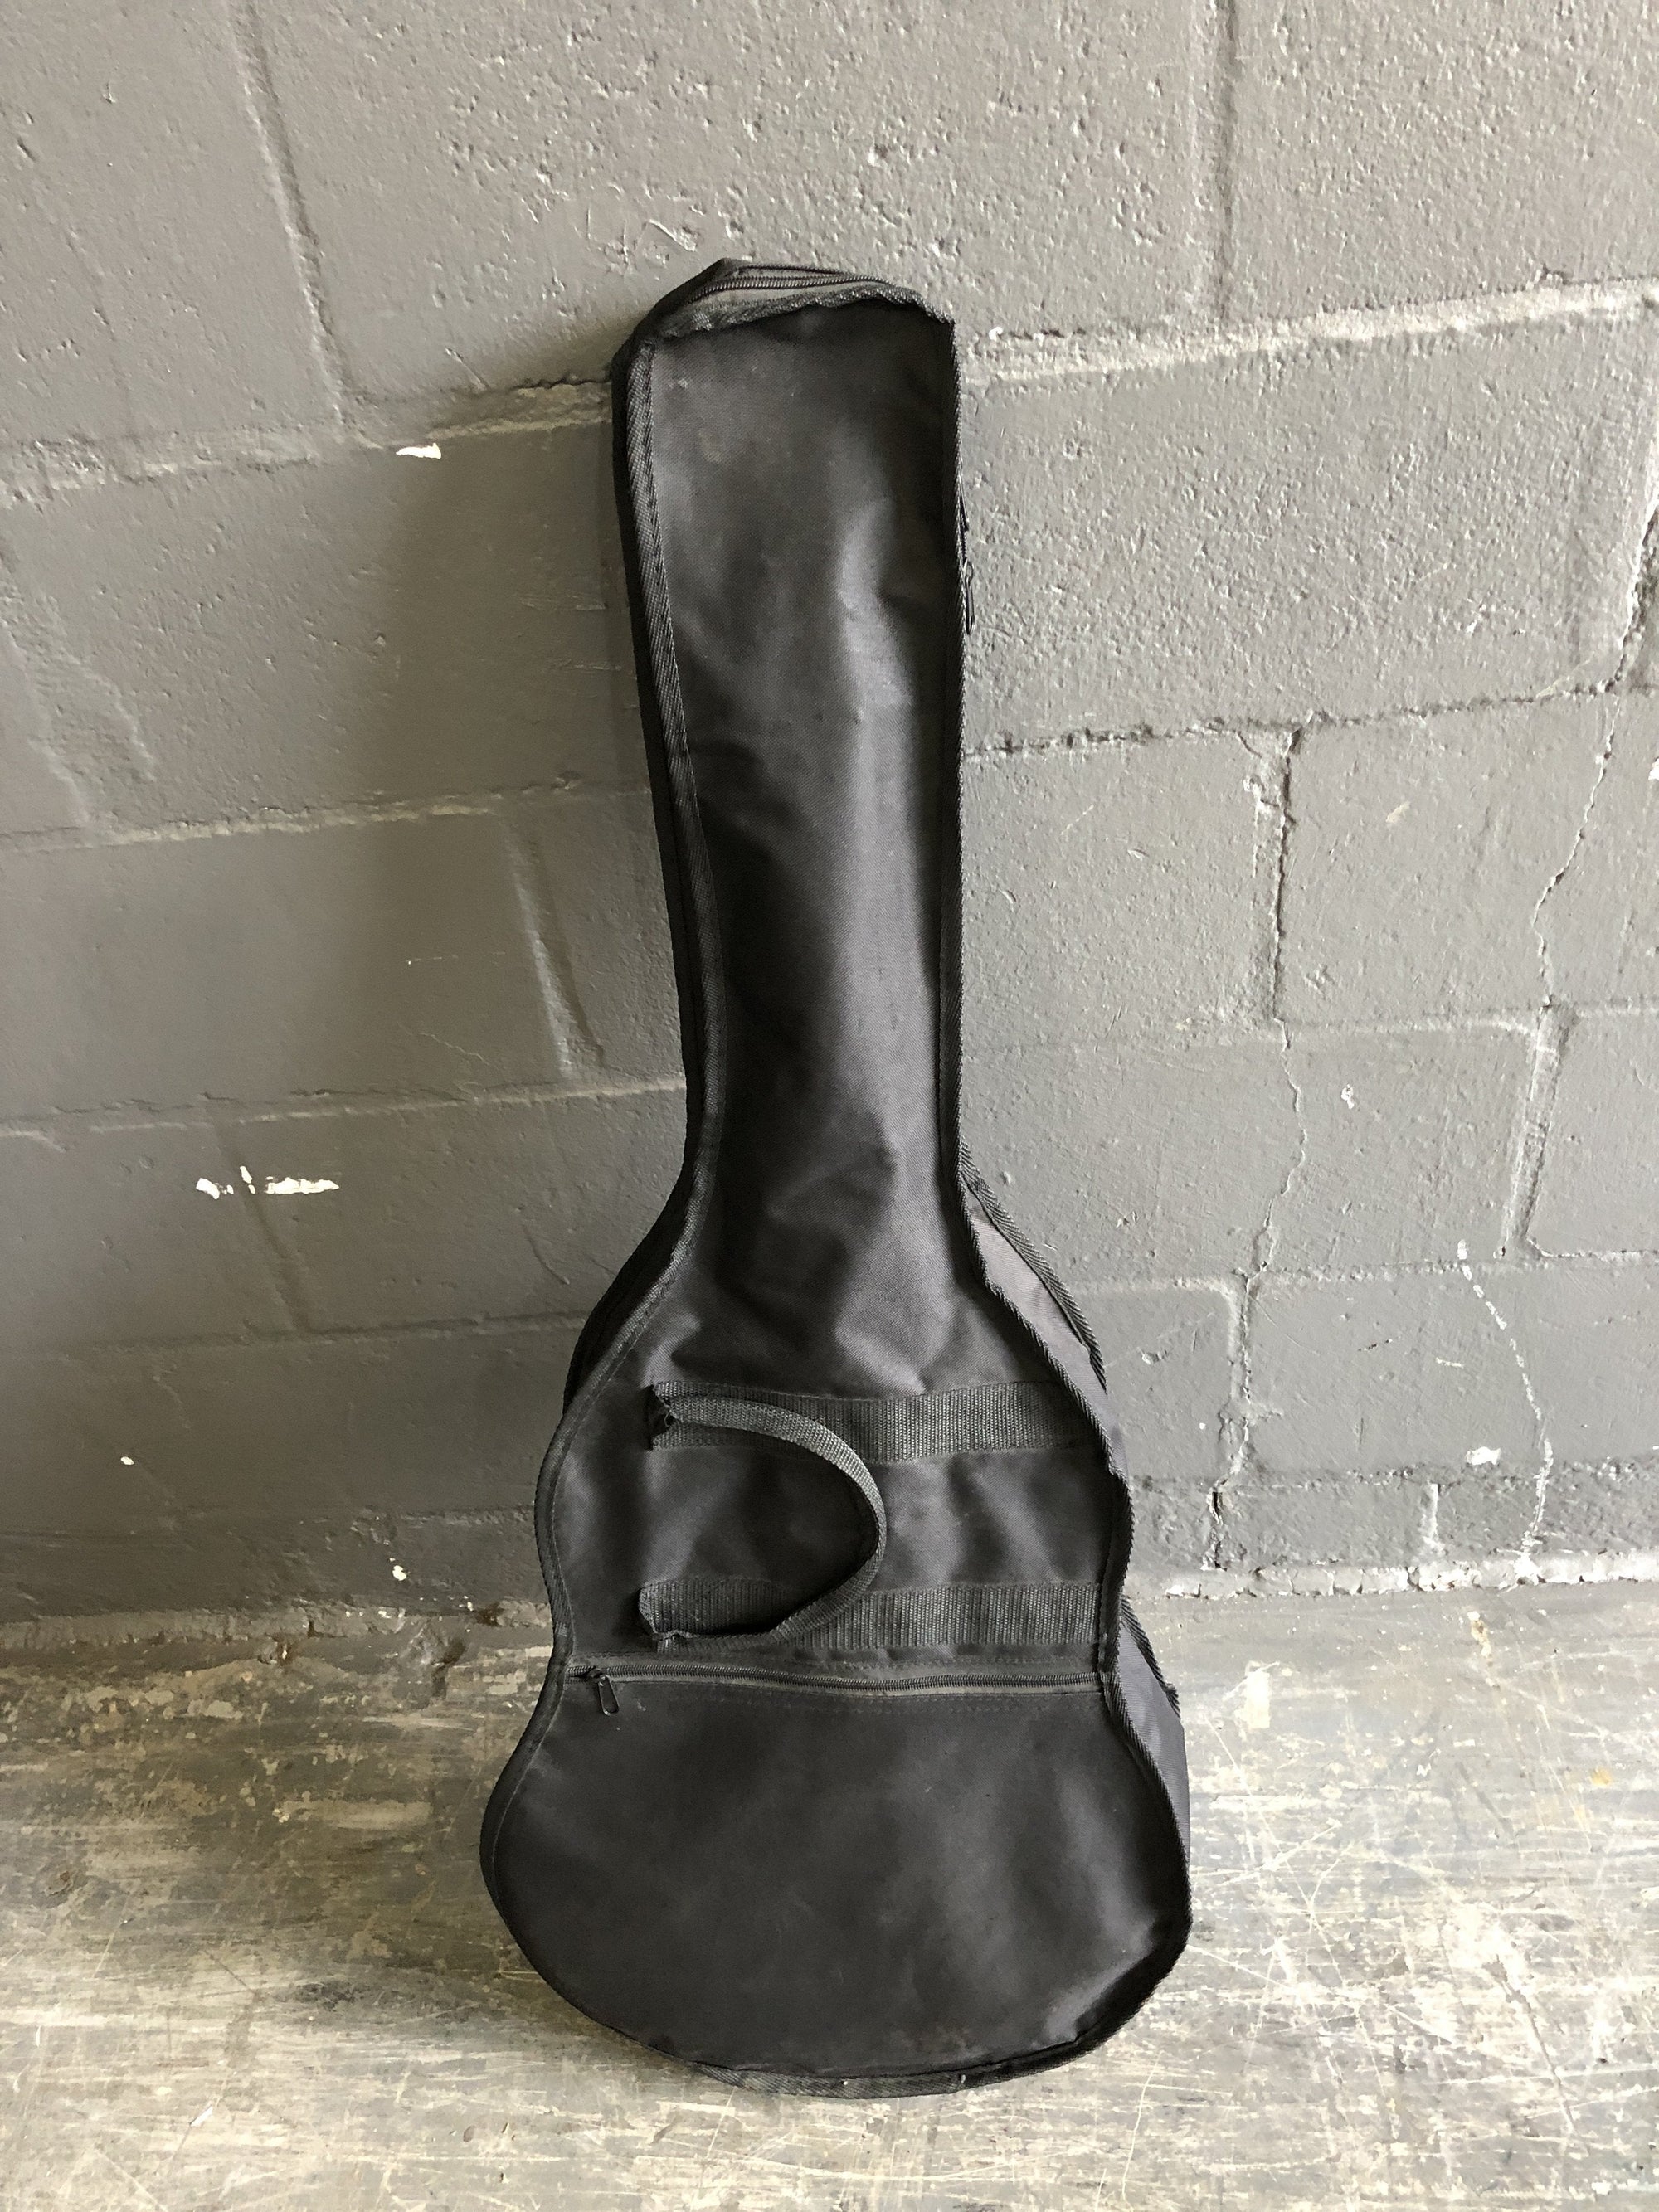 Guitar Bag - 2ndhandwarehouse.com